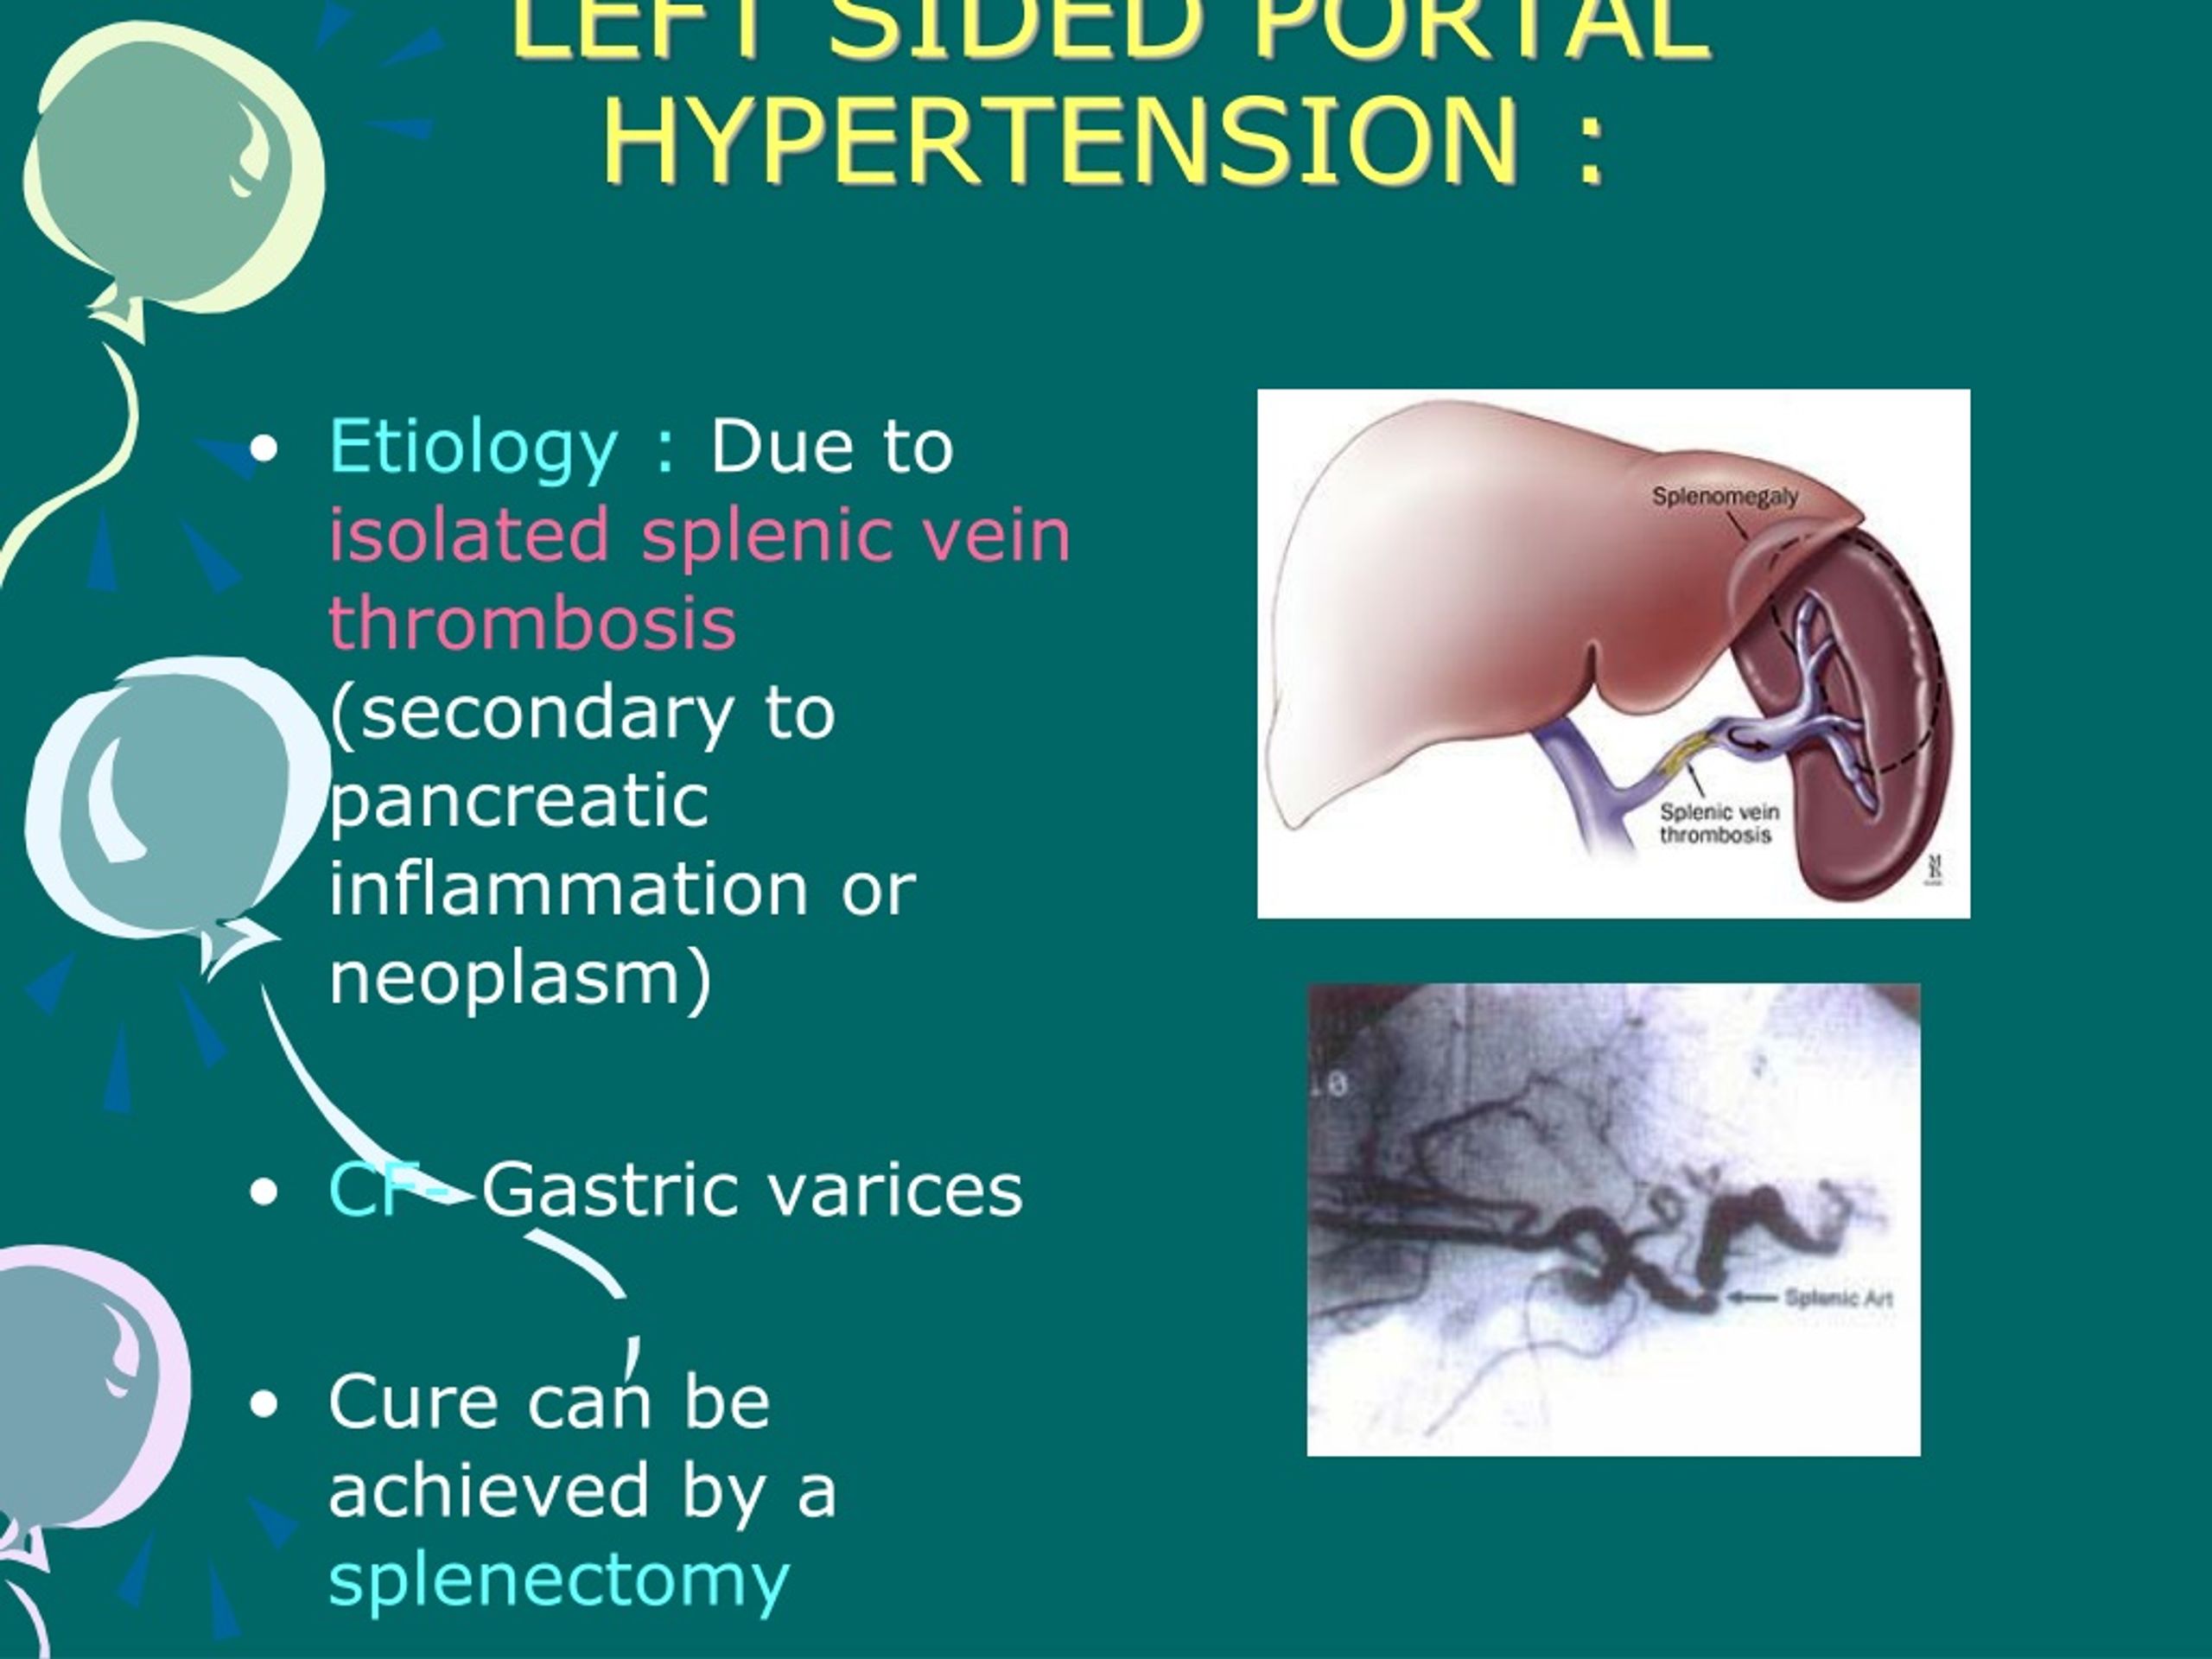 most common presentation of portal hypertension